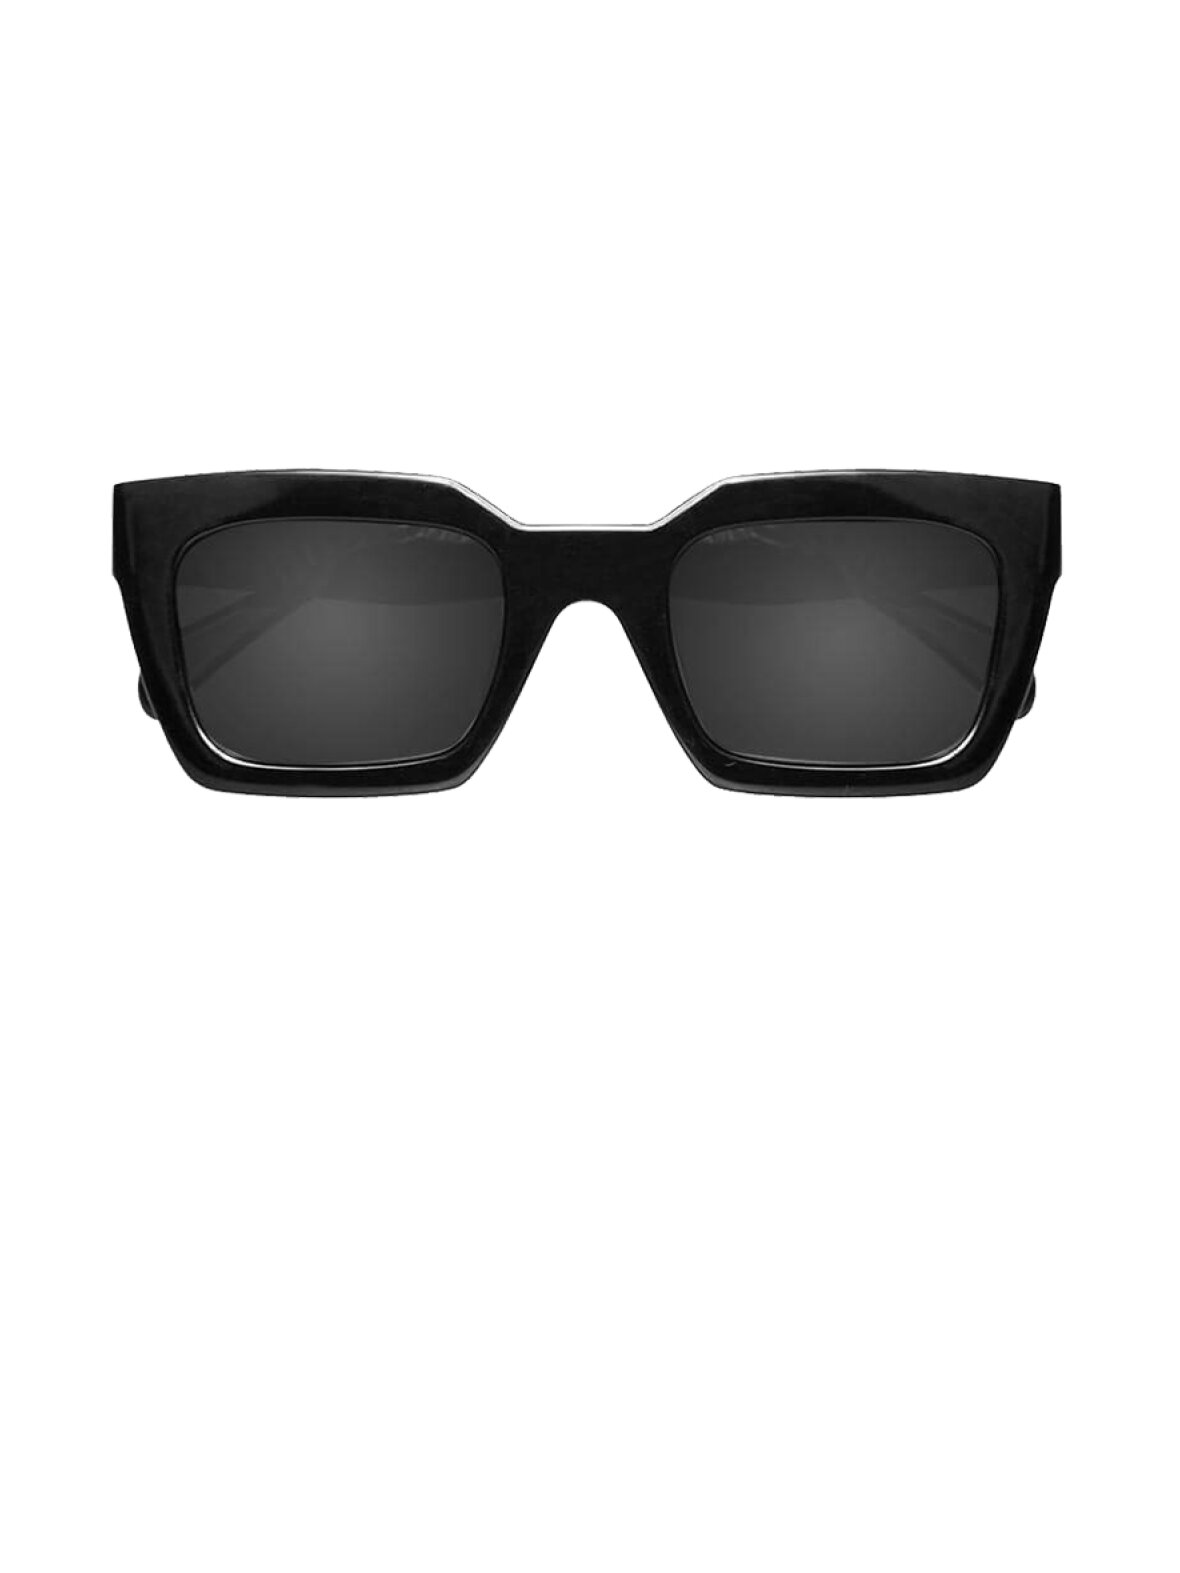 A'POKE - Bing Indio Sunglasses Black - Shop sorte